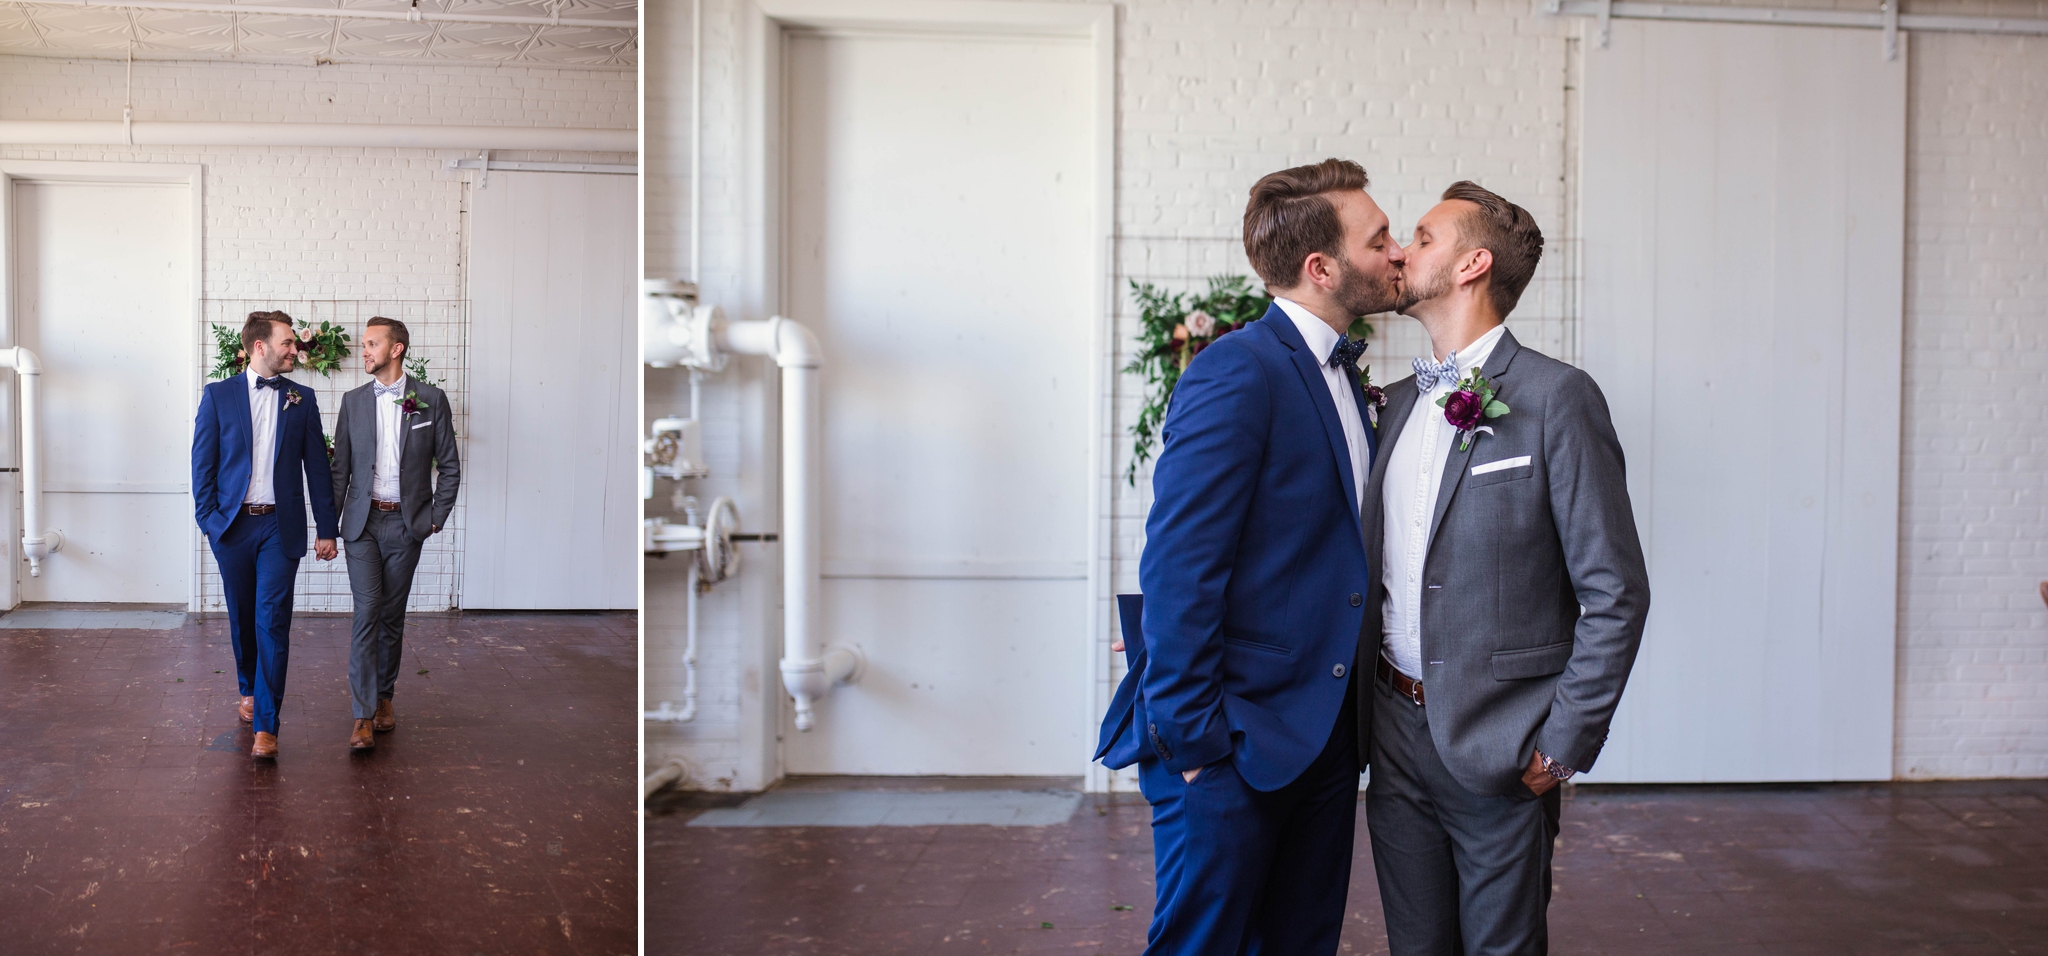 Gay and Lesbian friendly Wedding Photographer in Raleigh North Carolina - Johanna Dye Photography 11.jpg